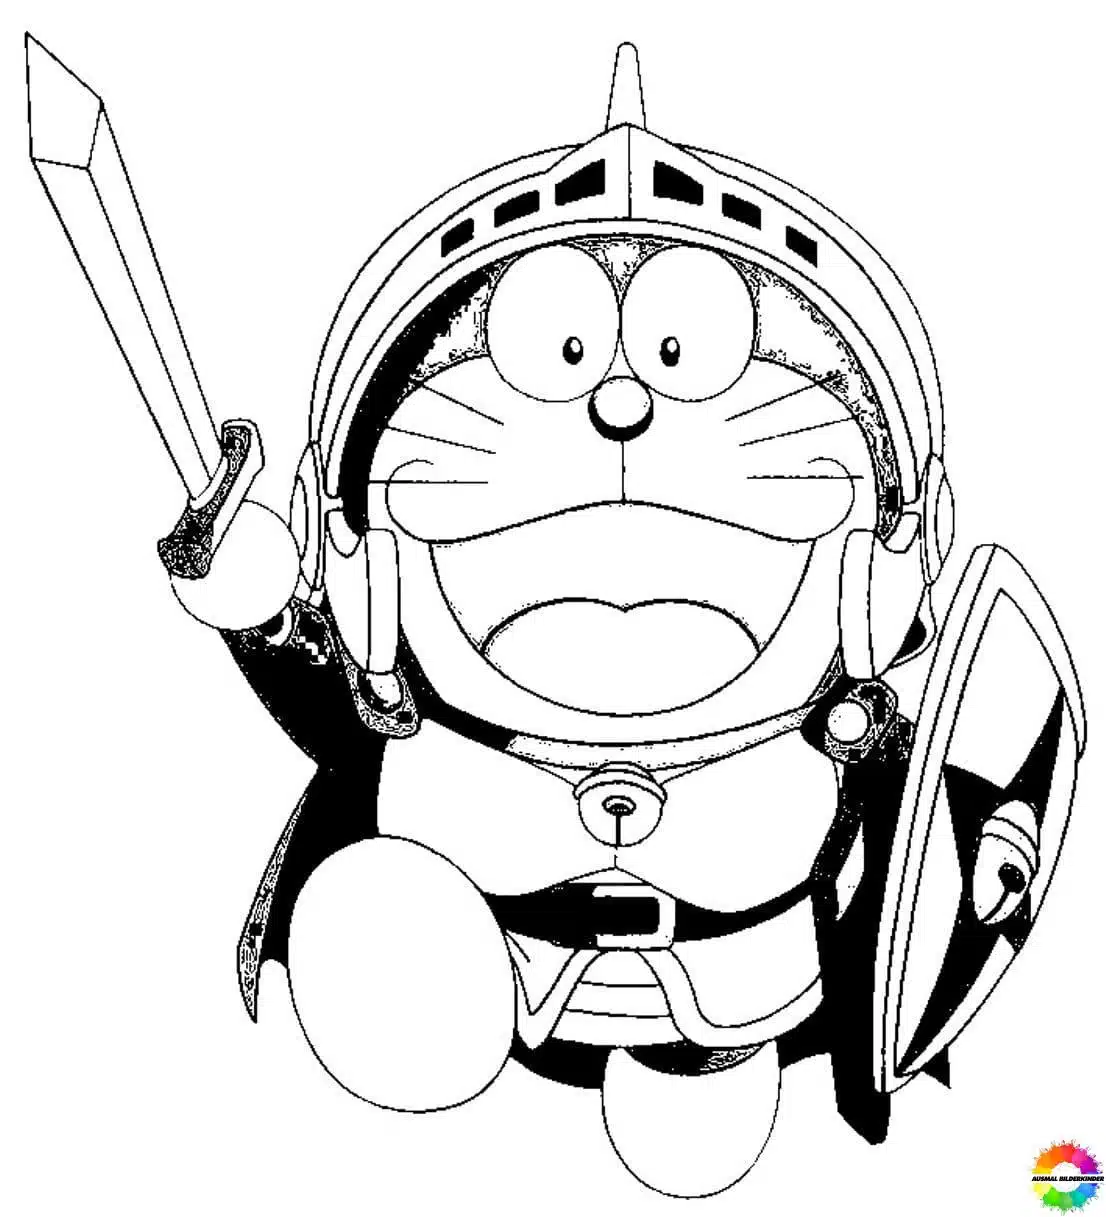 Doraemon 31